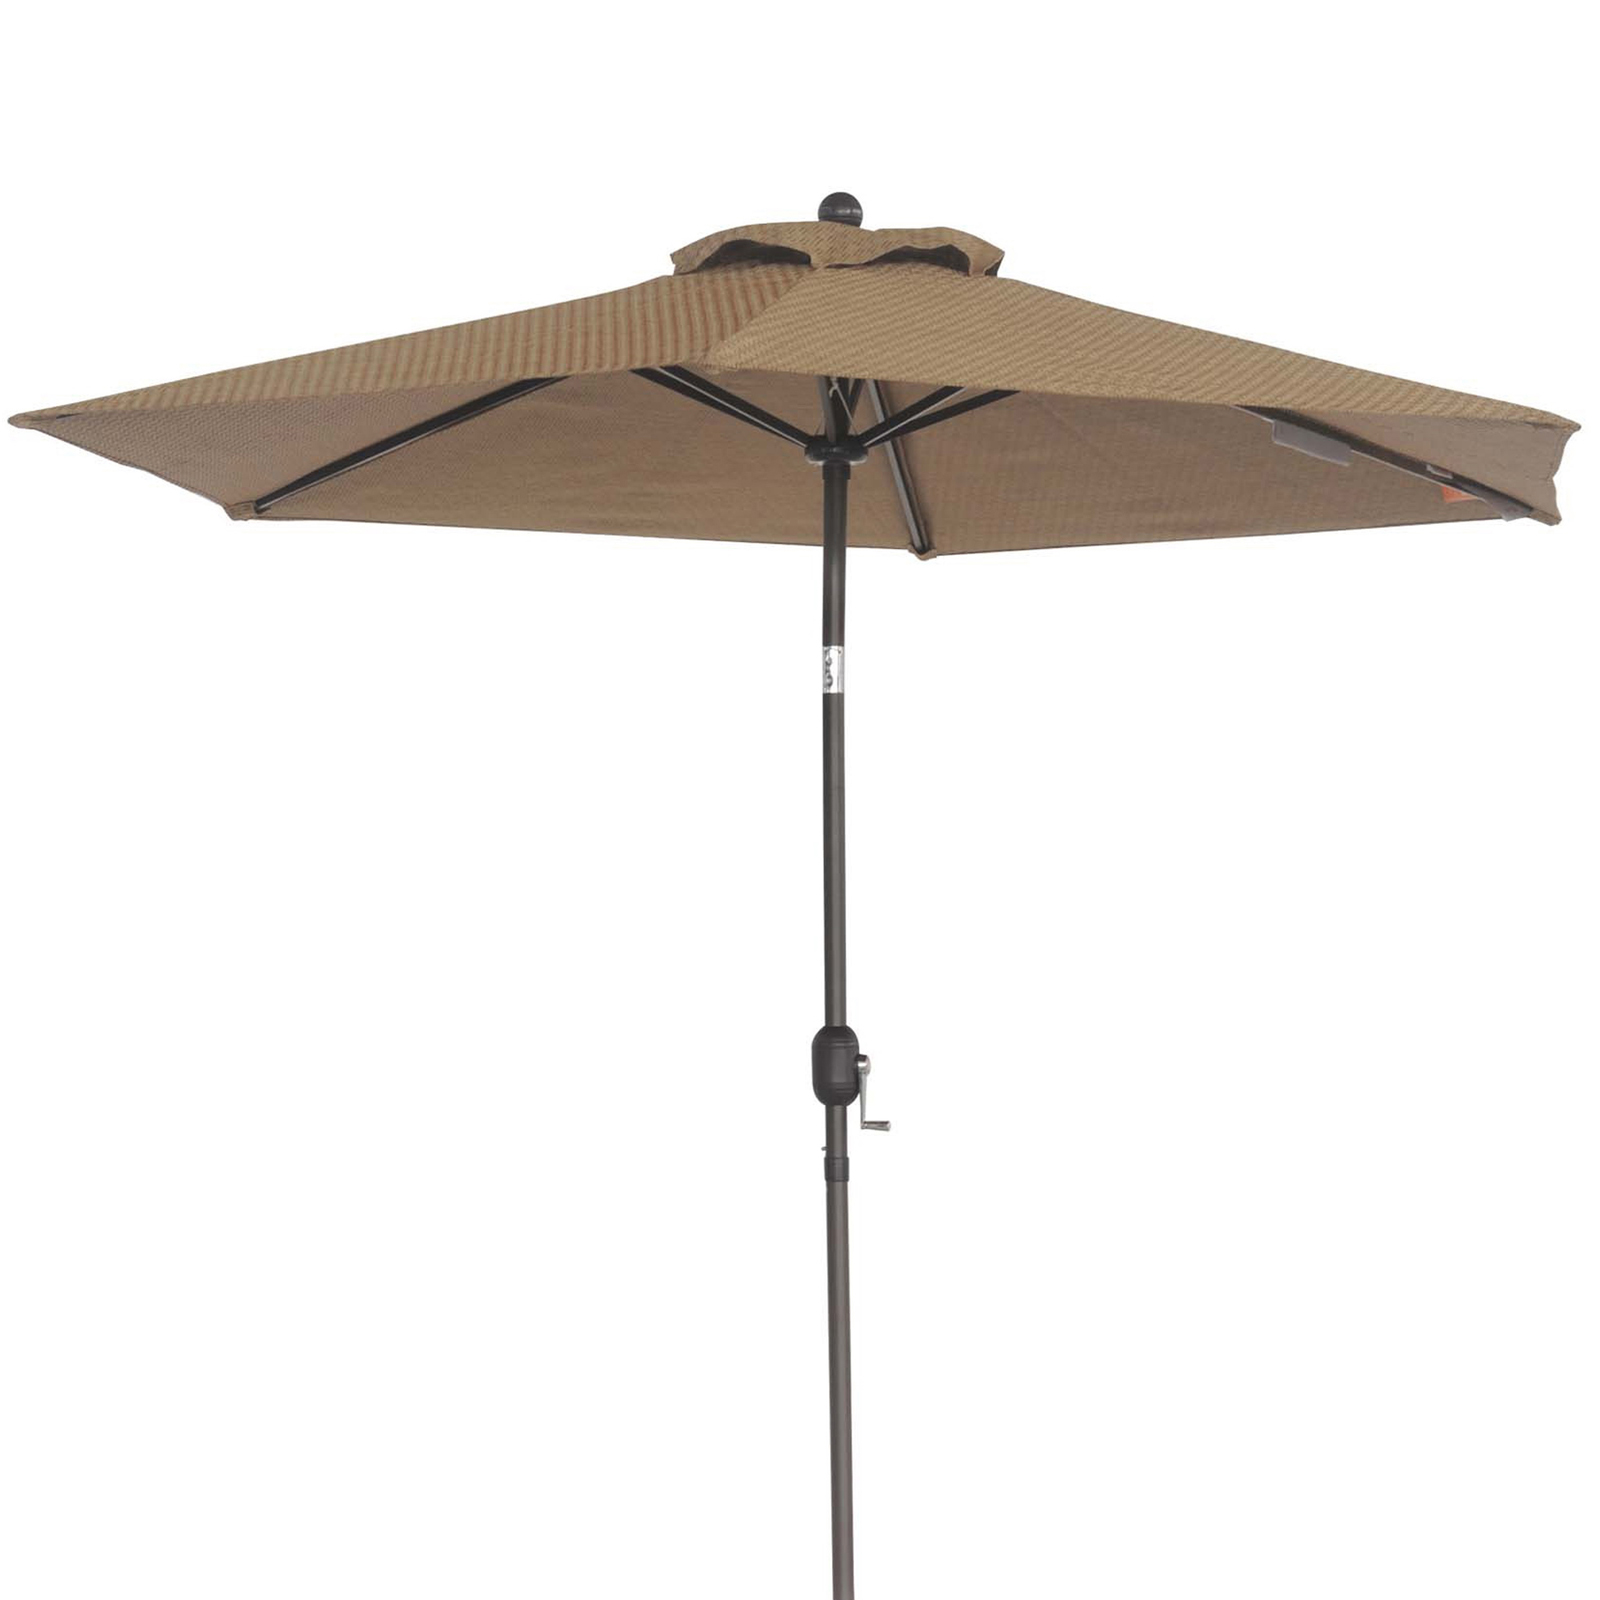 Sunjoy Delilah Market Umbrella *Limited Availability